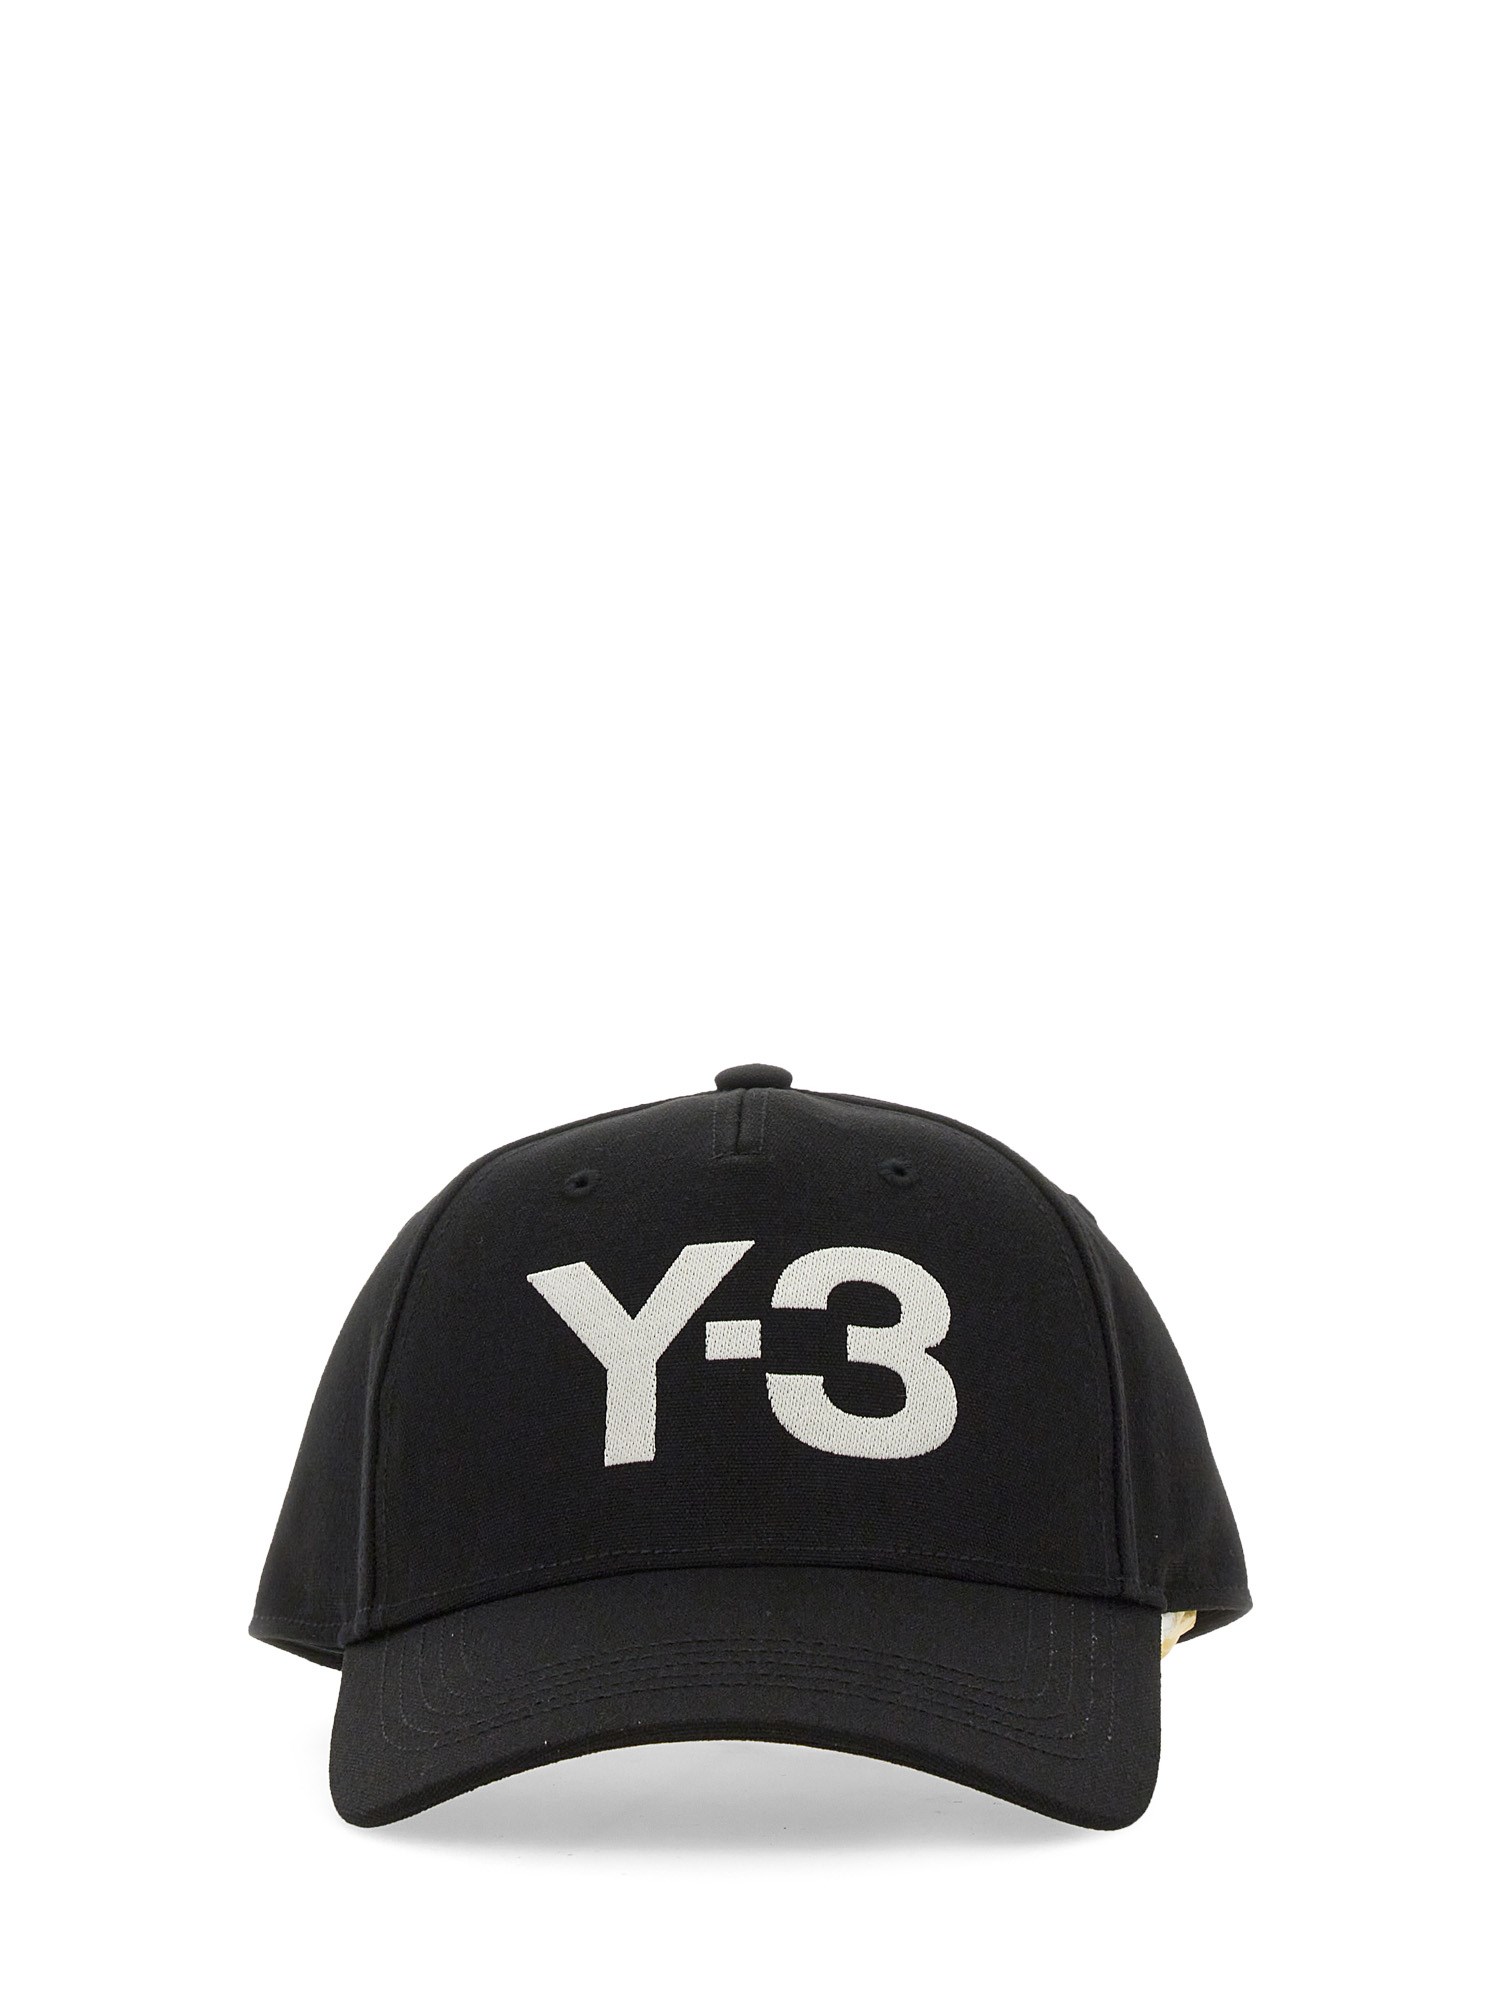 Y-3 BASEBALL HAT WITH LOGO